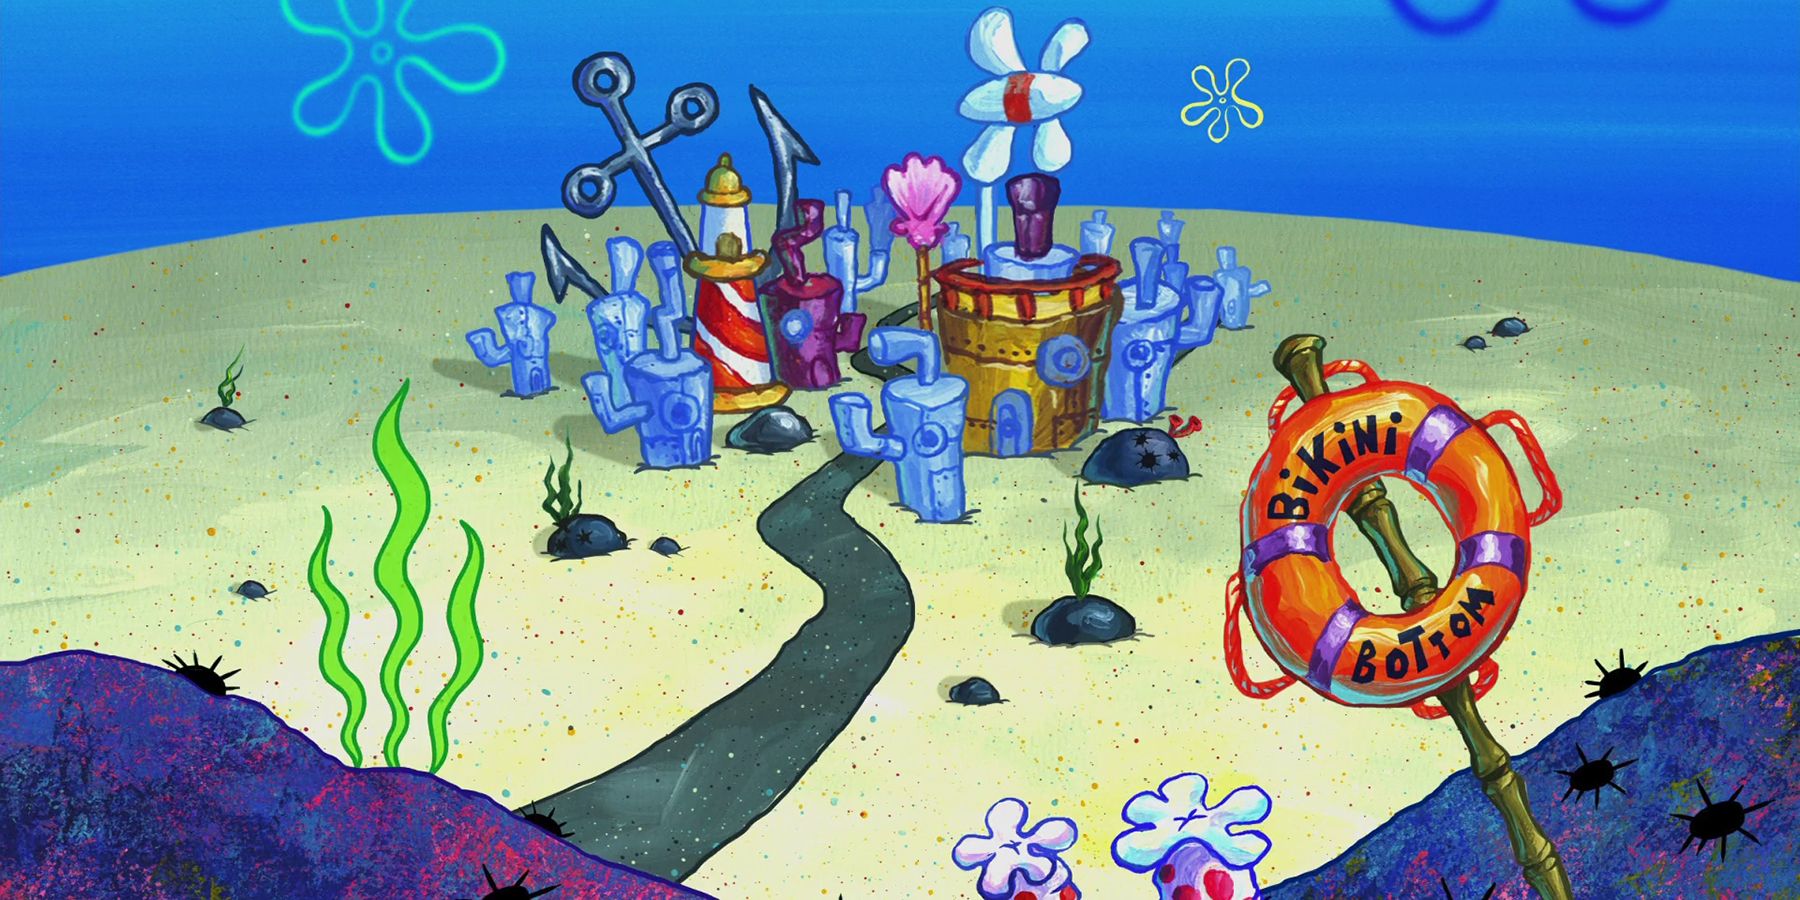 The town of Bikini Bottom from SpongeBob SquarePants